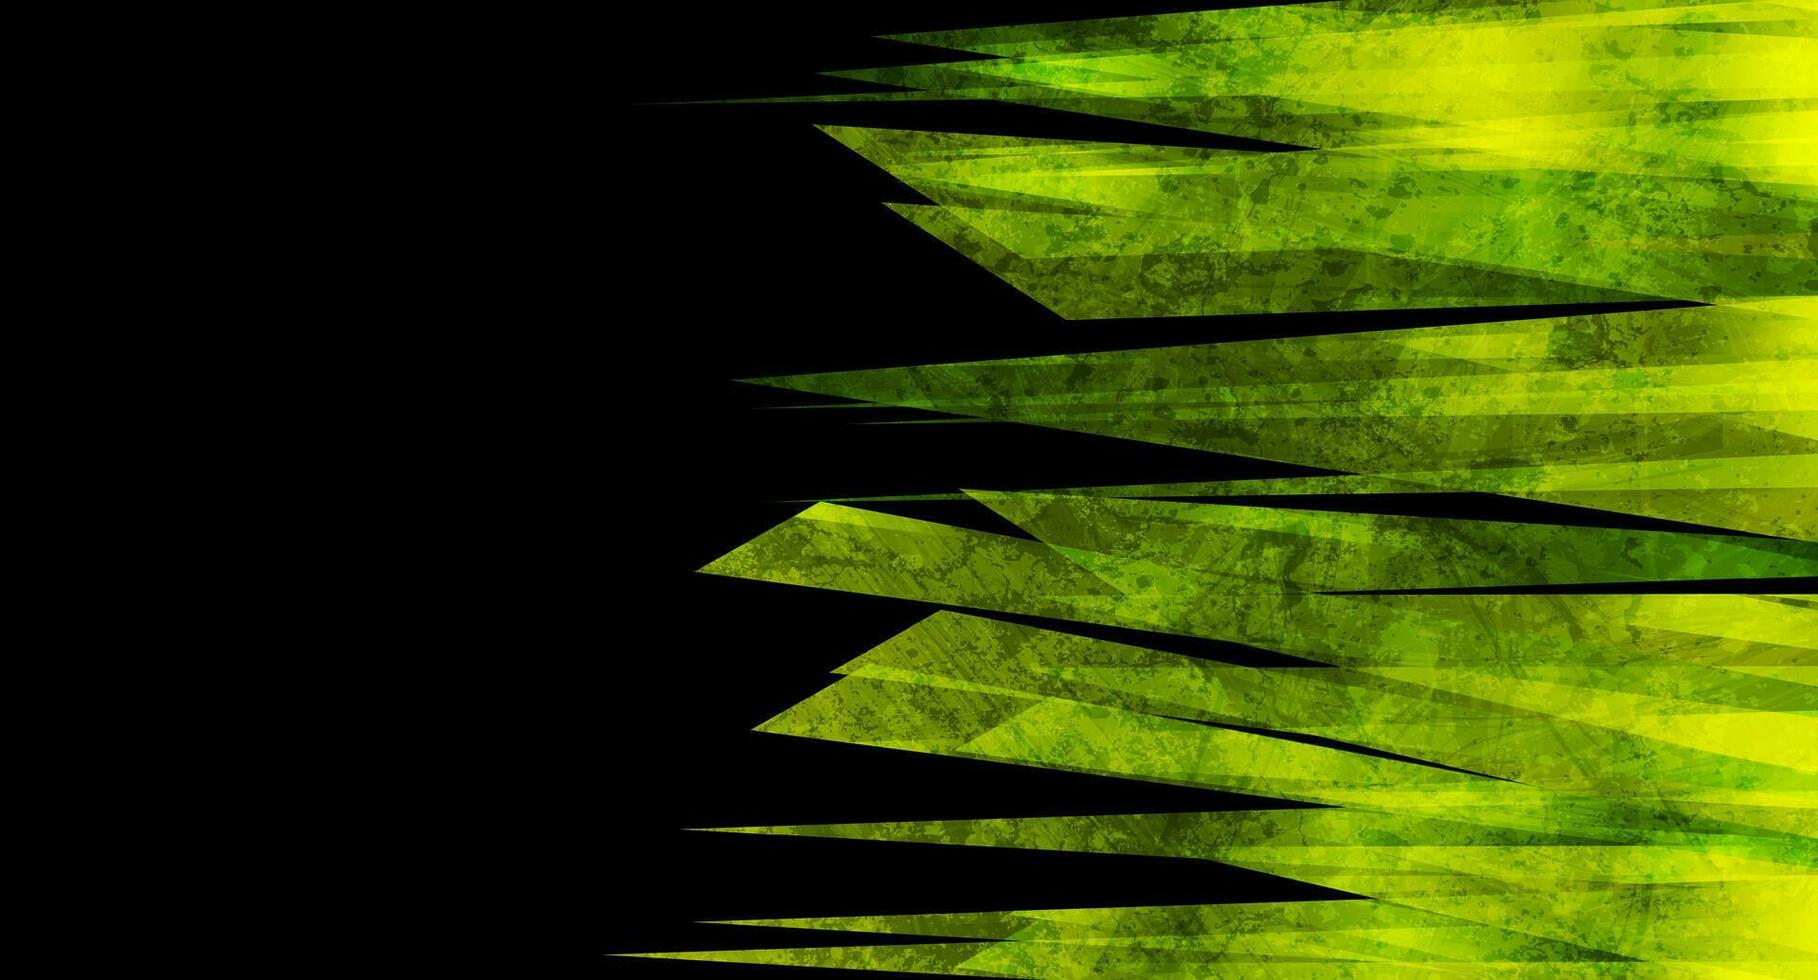 groen en zwart grunge strepen abstract achtergrond vector